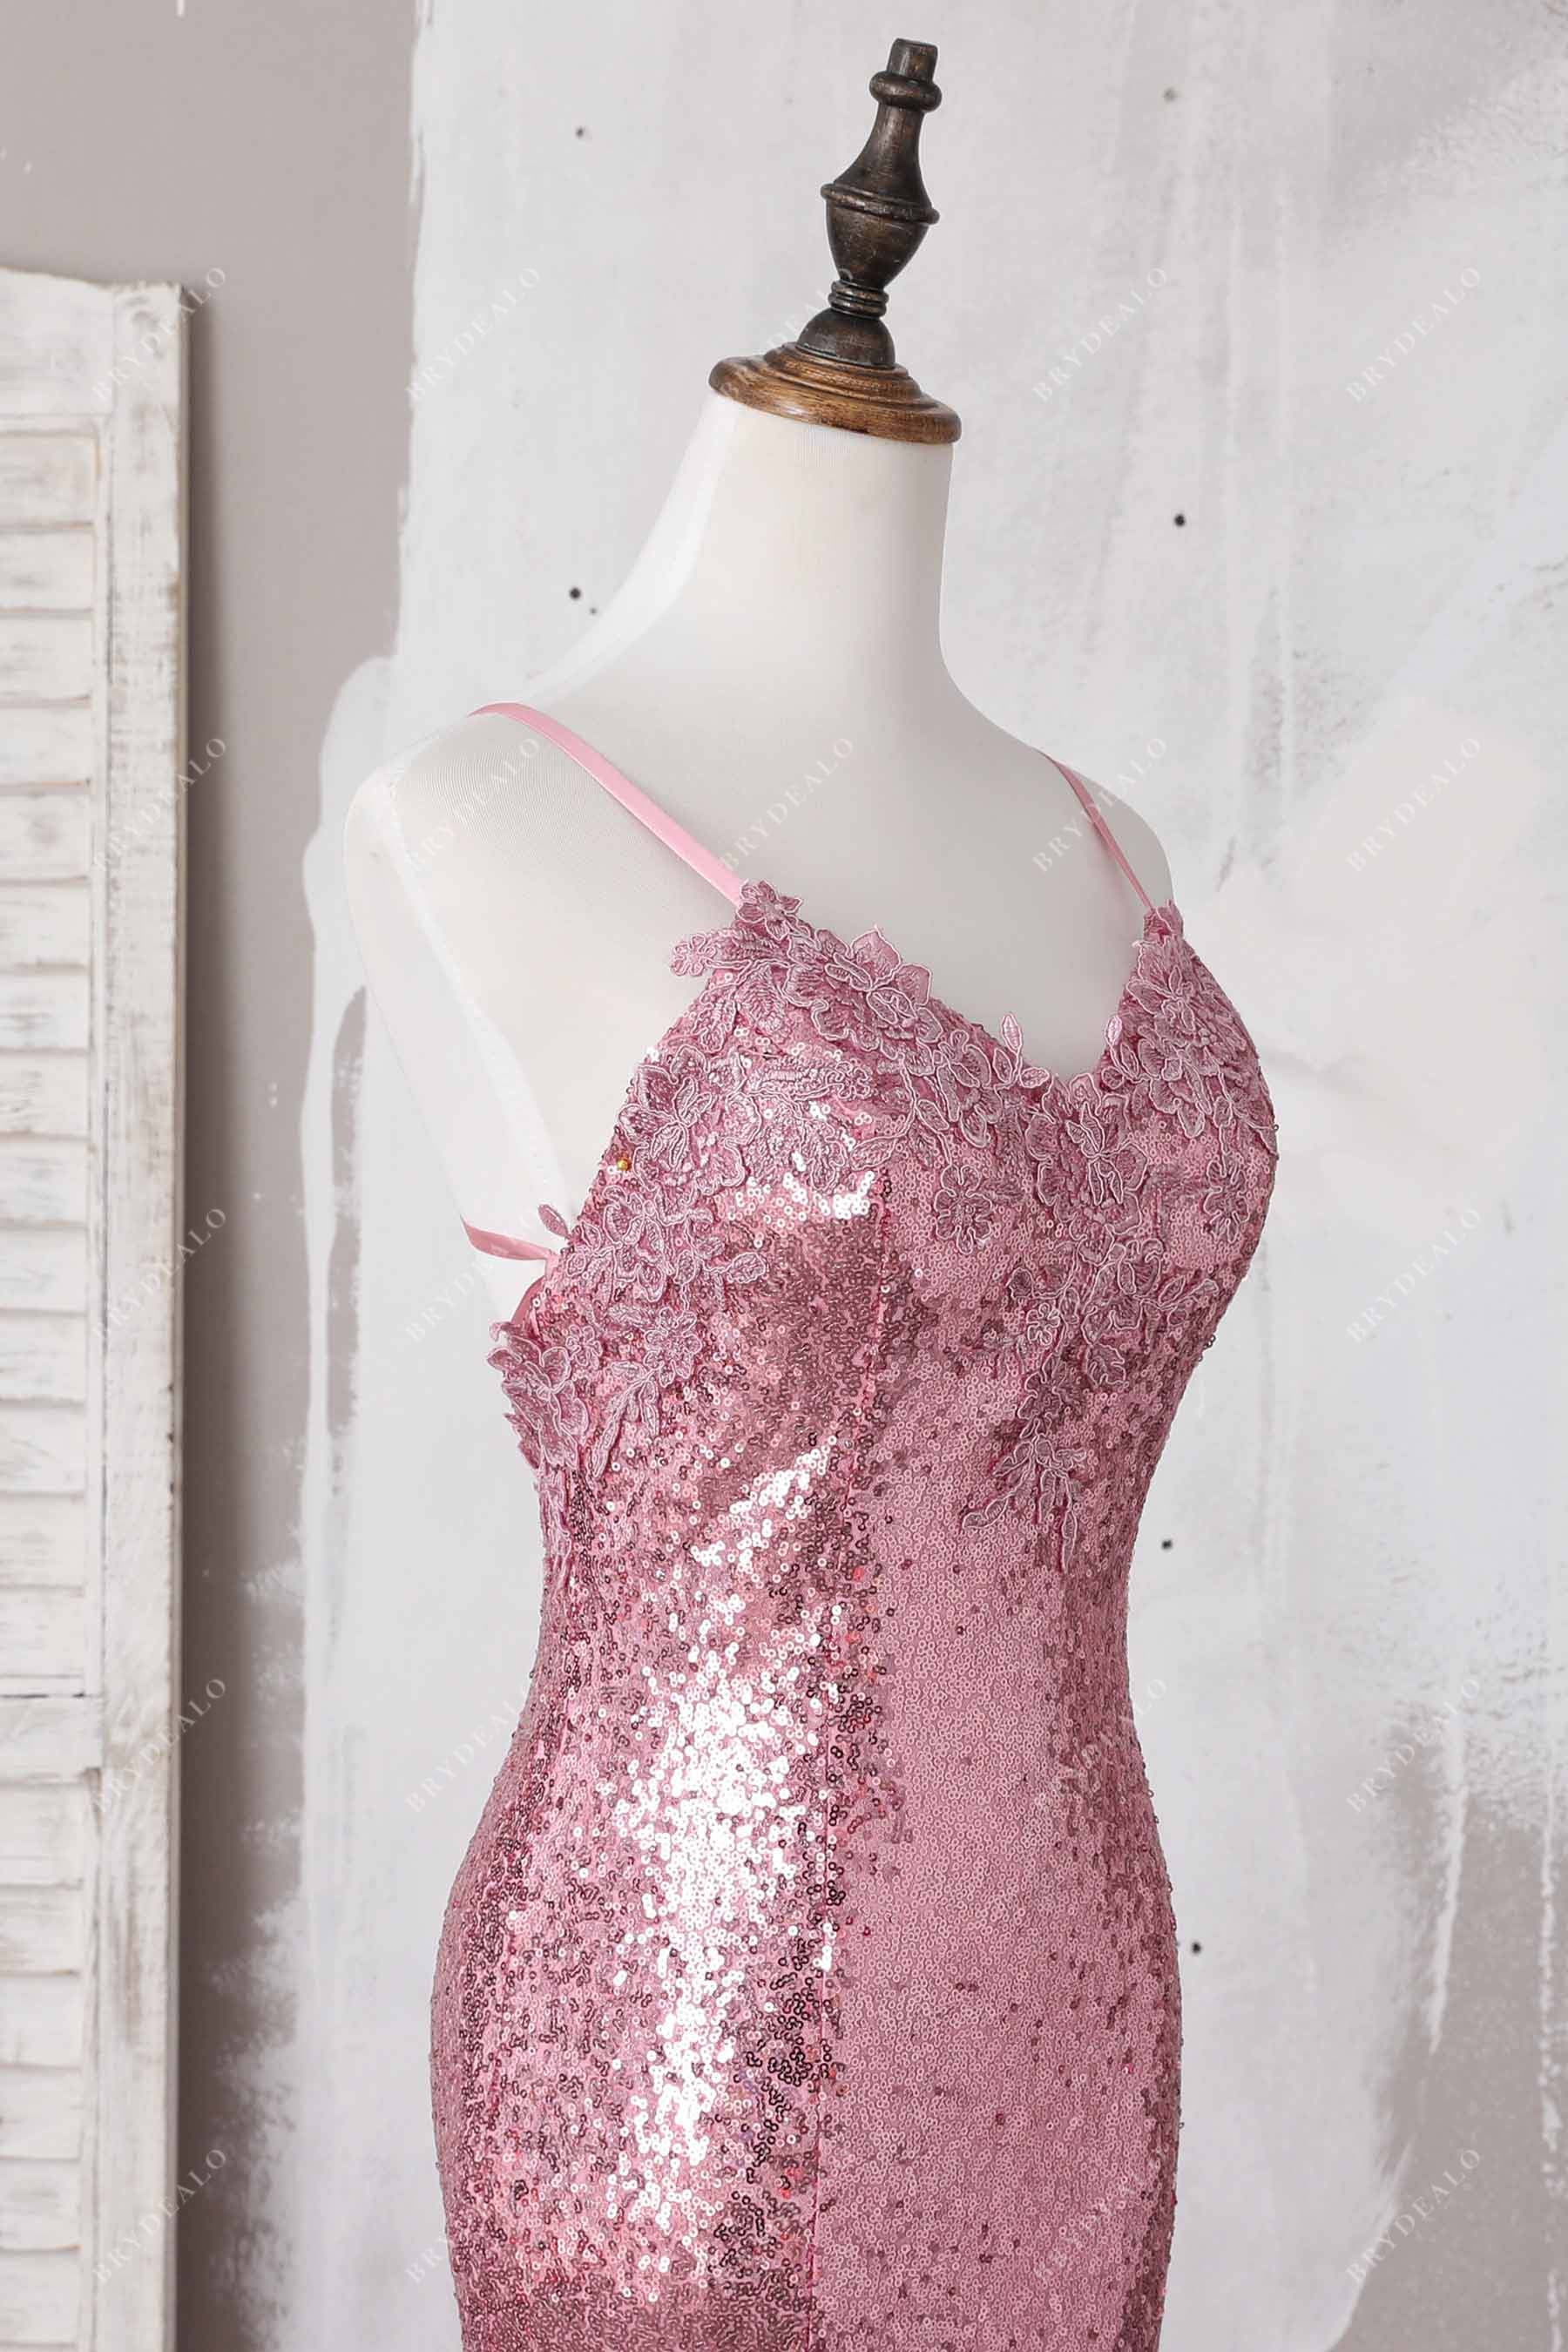 V-neck spaghetti straps pink prom dress